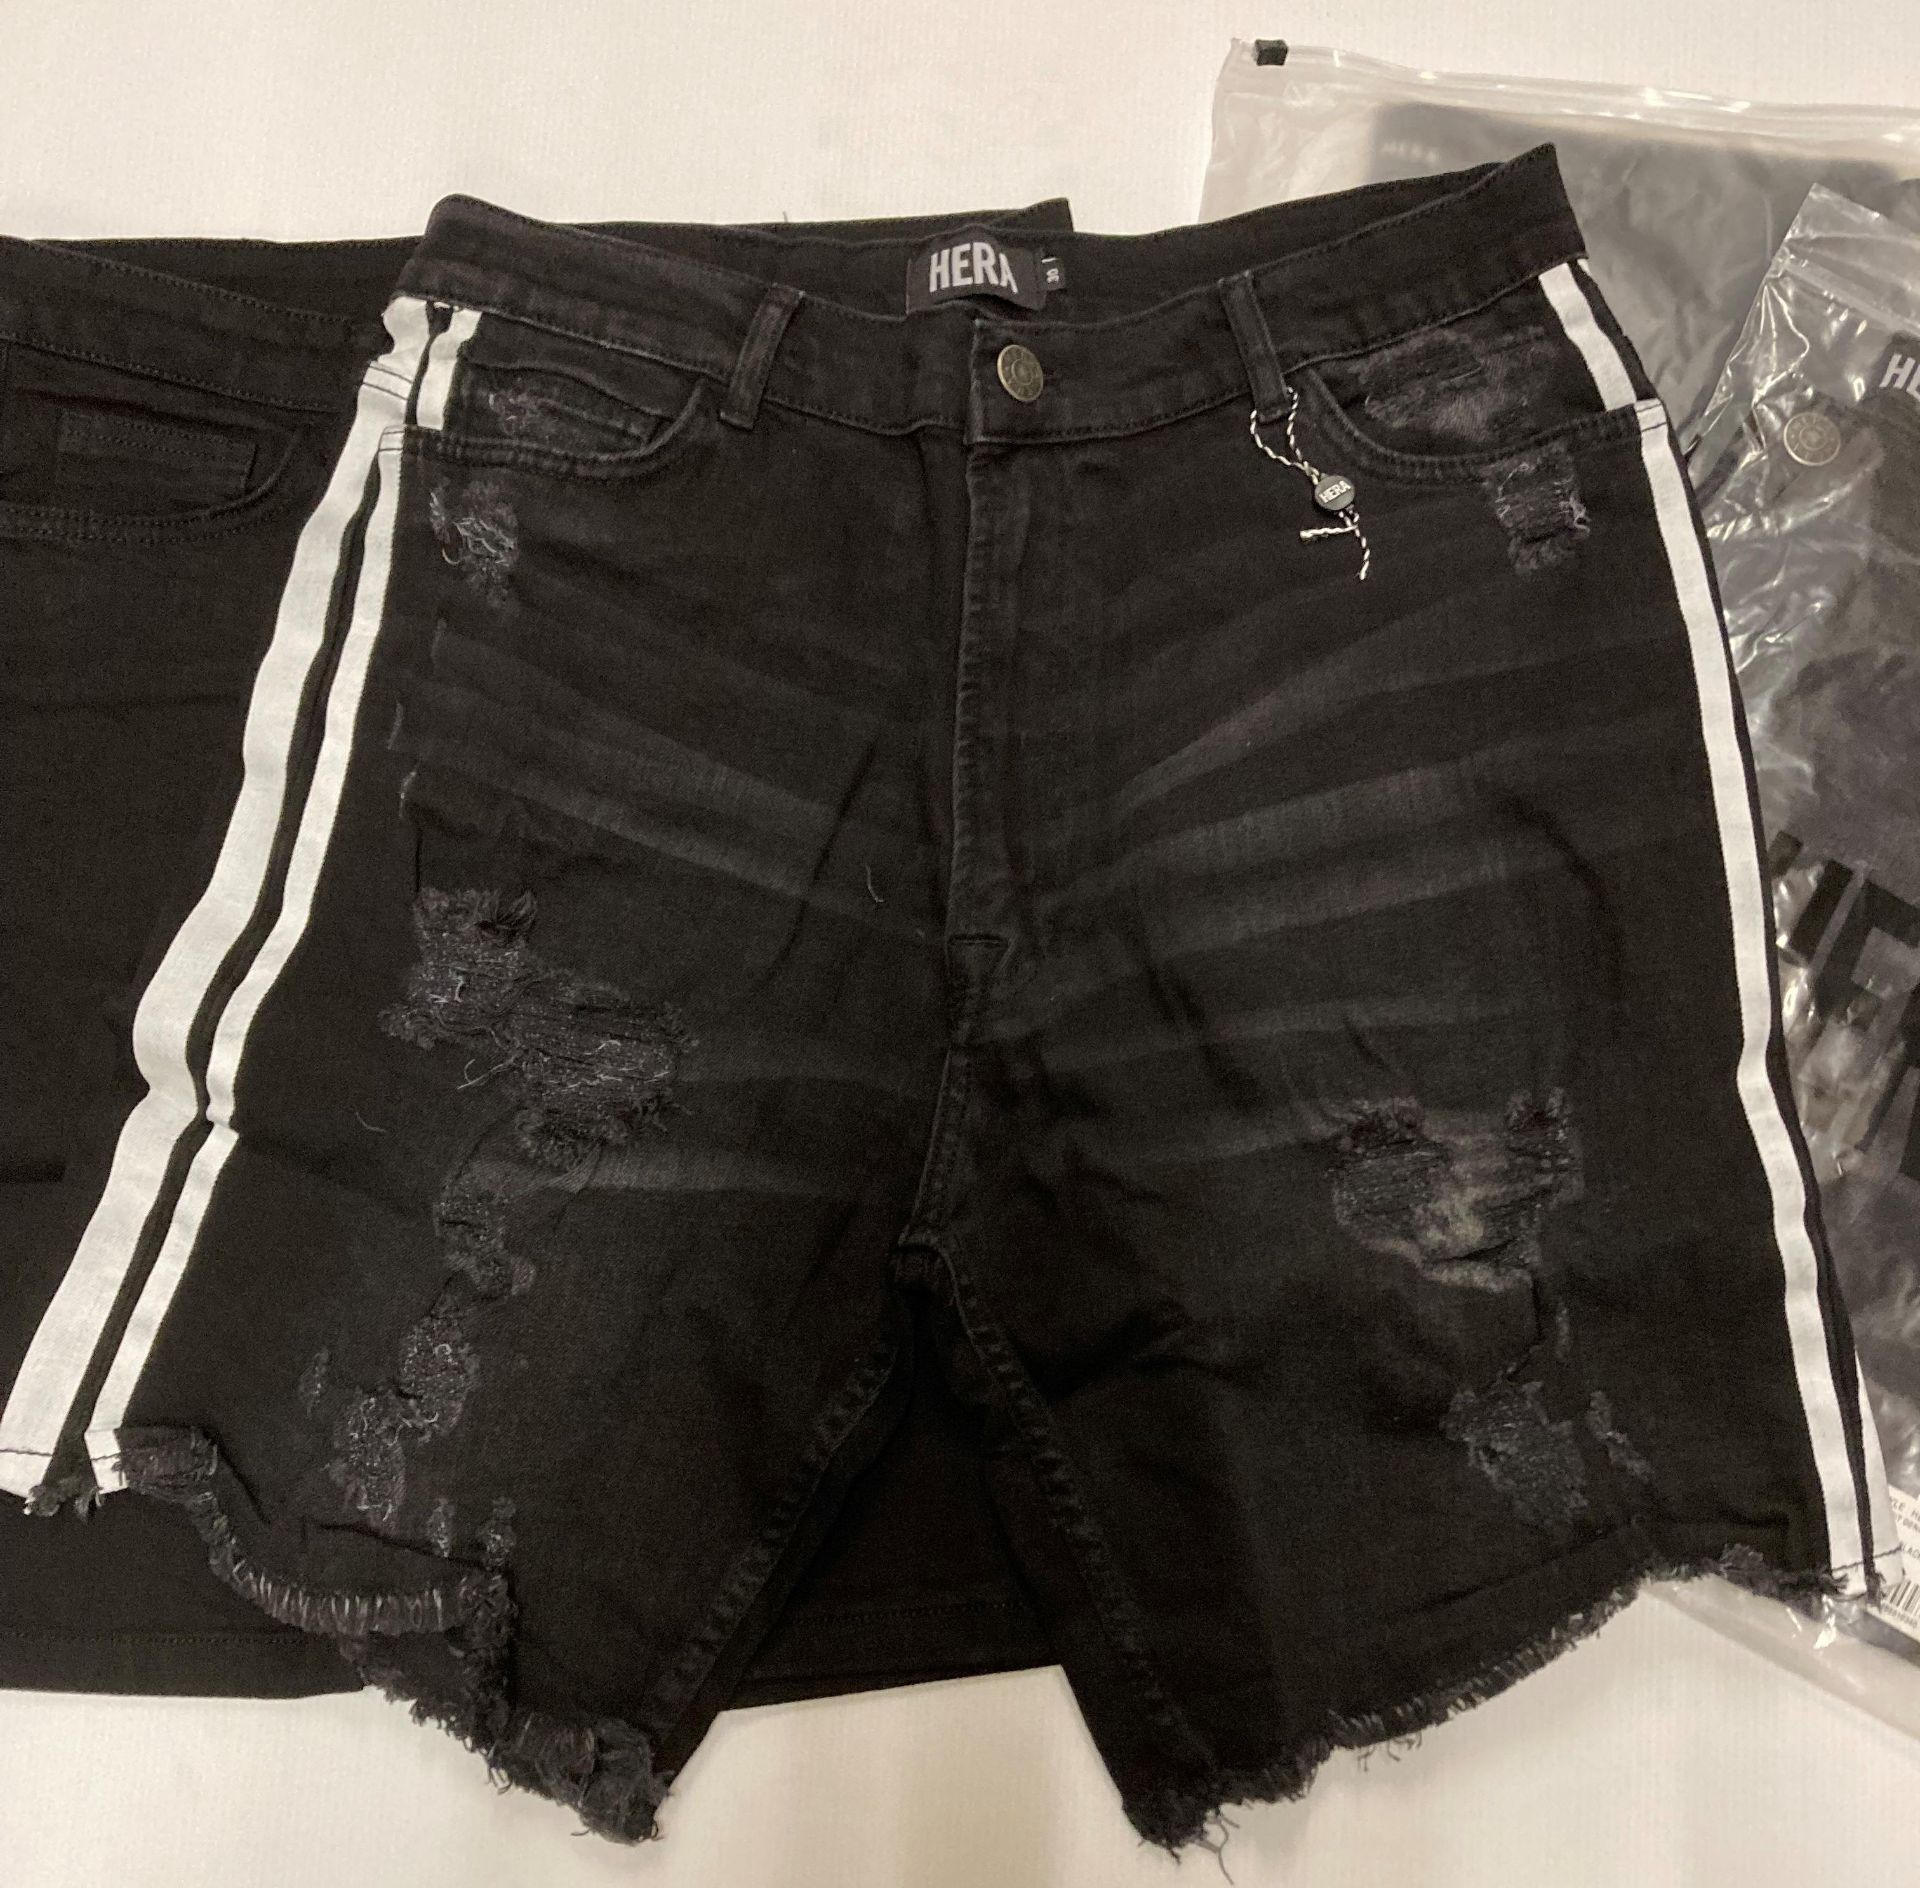 4 x items - 2 x Hera black denim shorts (size 32) and 2 x Hera slim fit black denim shorts with - Image 3 of 3